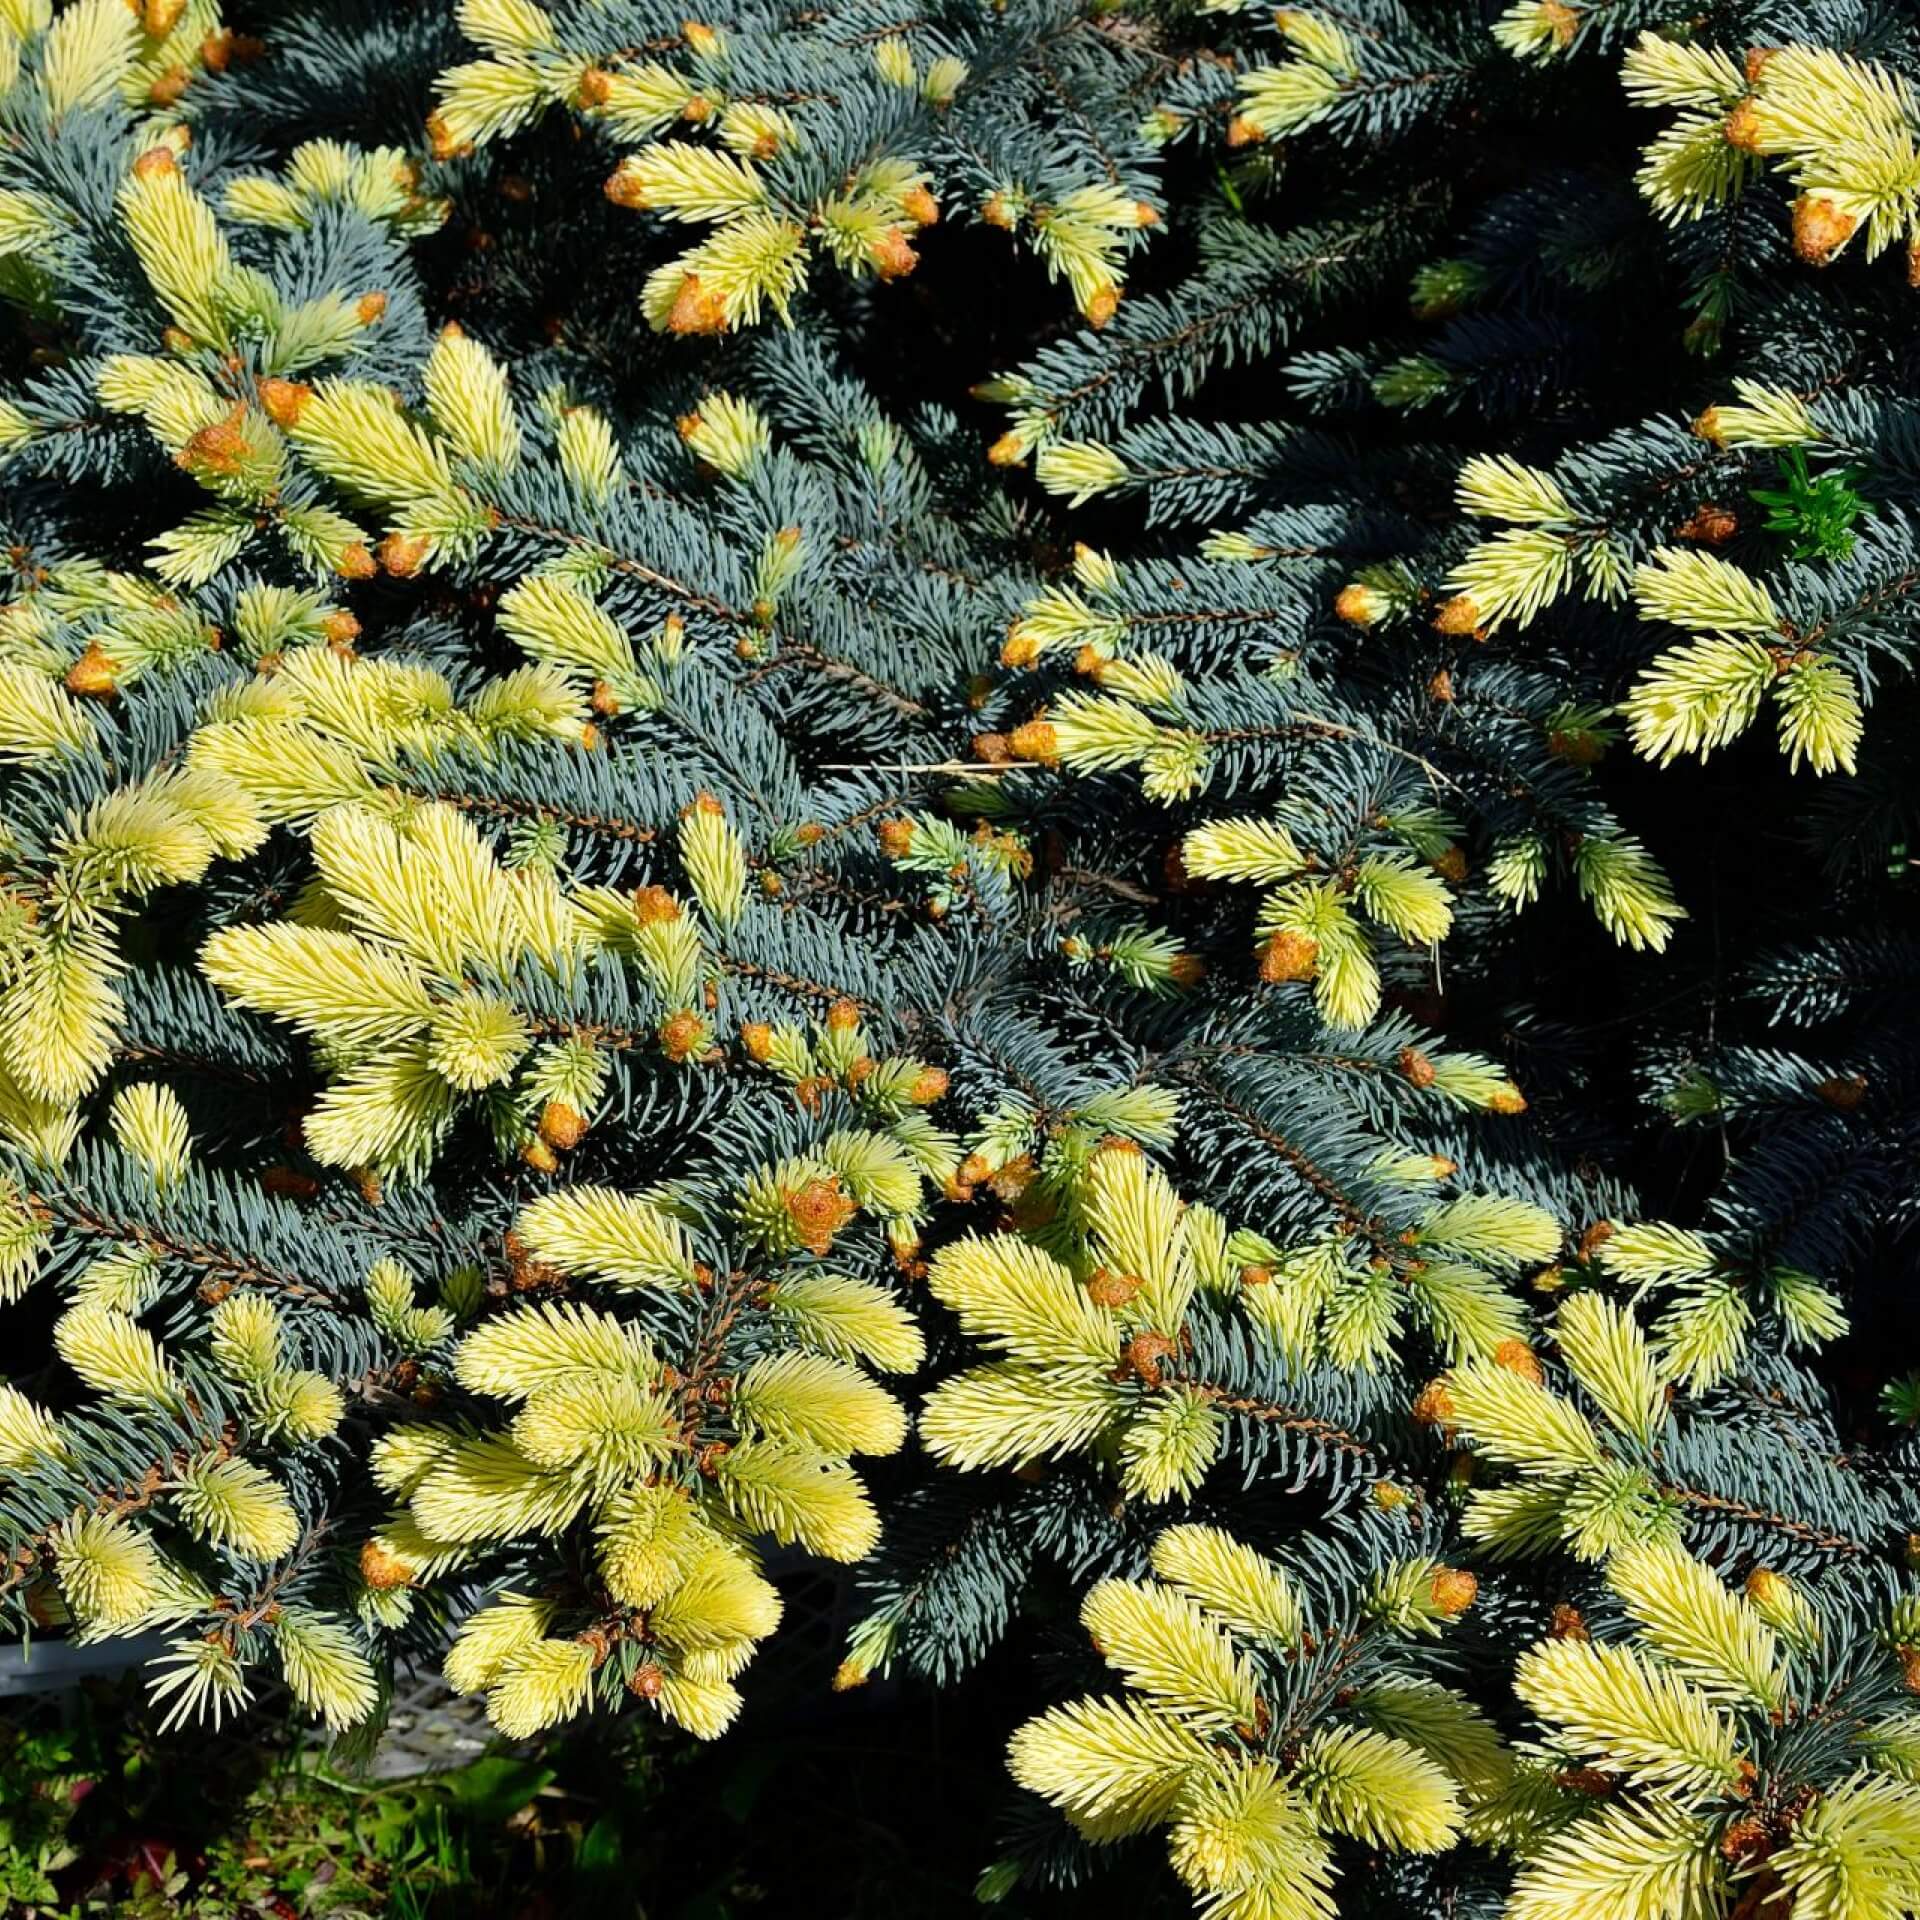 Stechfichte 'Maigold' (Picea pungens 'Maigold')